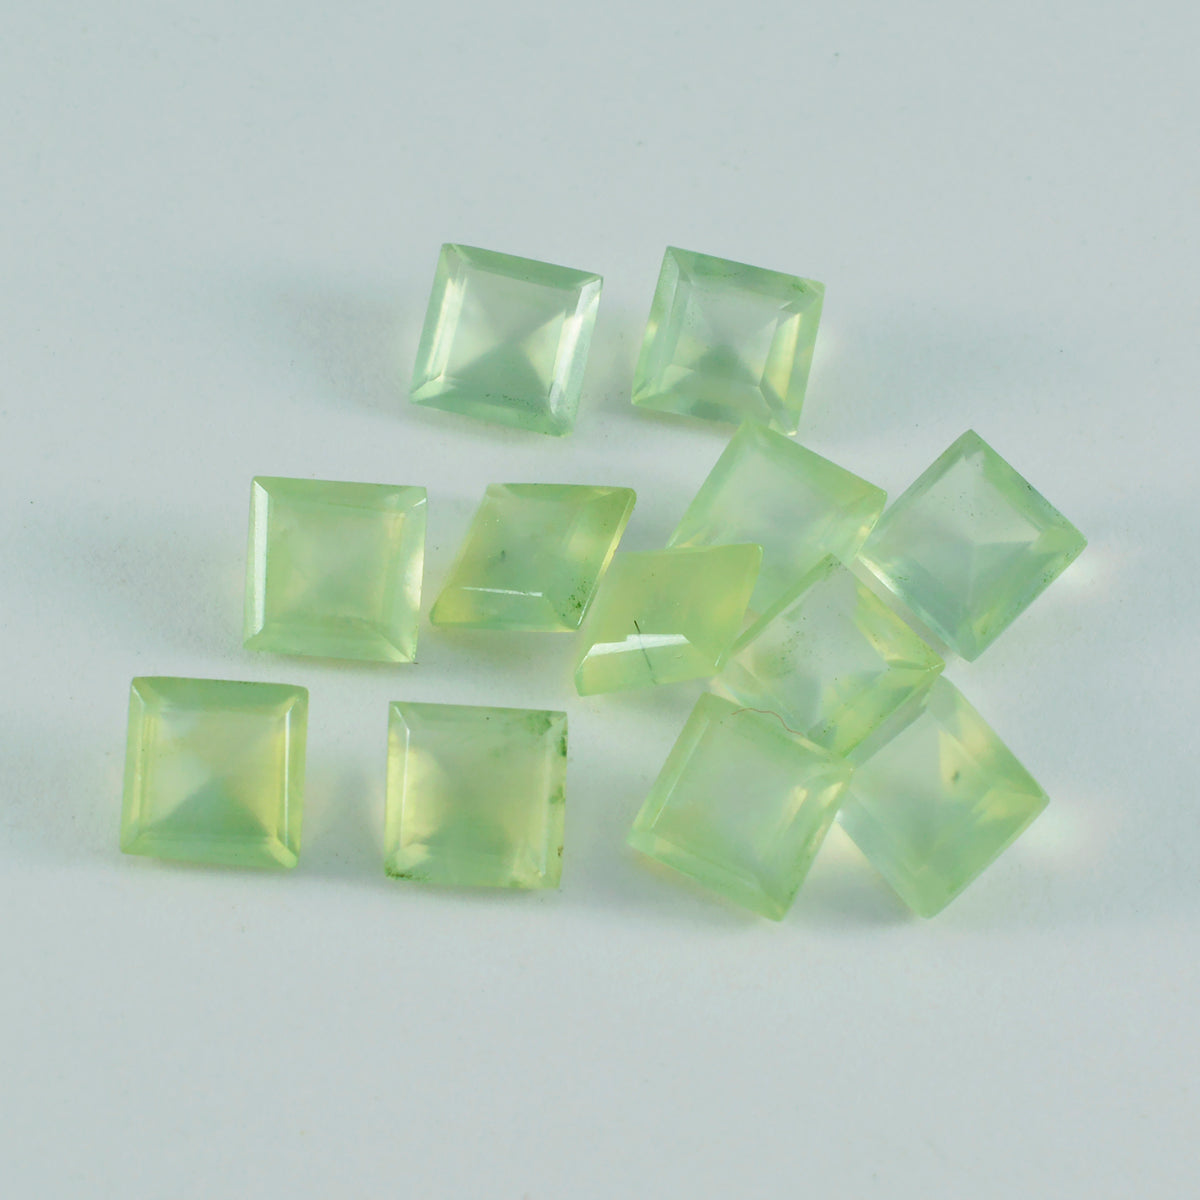 riyogems 1pc グリーン プレナイト ファセット 7x7 mm 正方形の形状の見栄えの良い品質の宝石